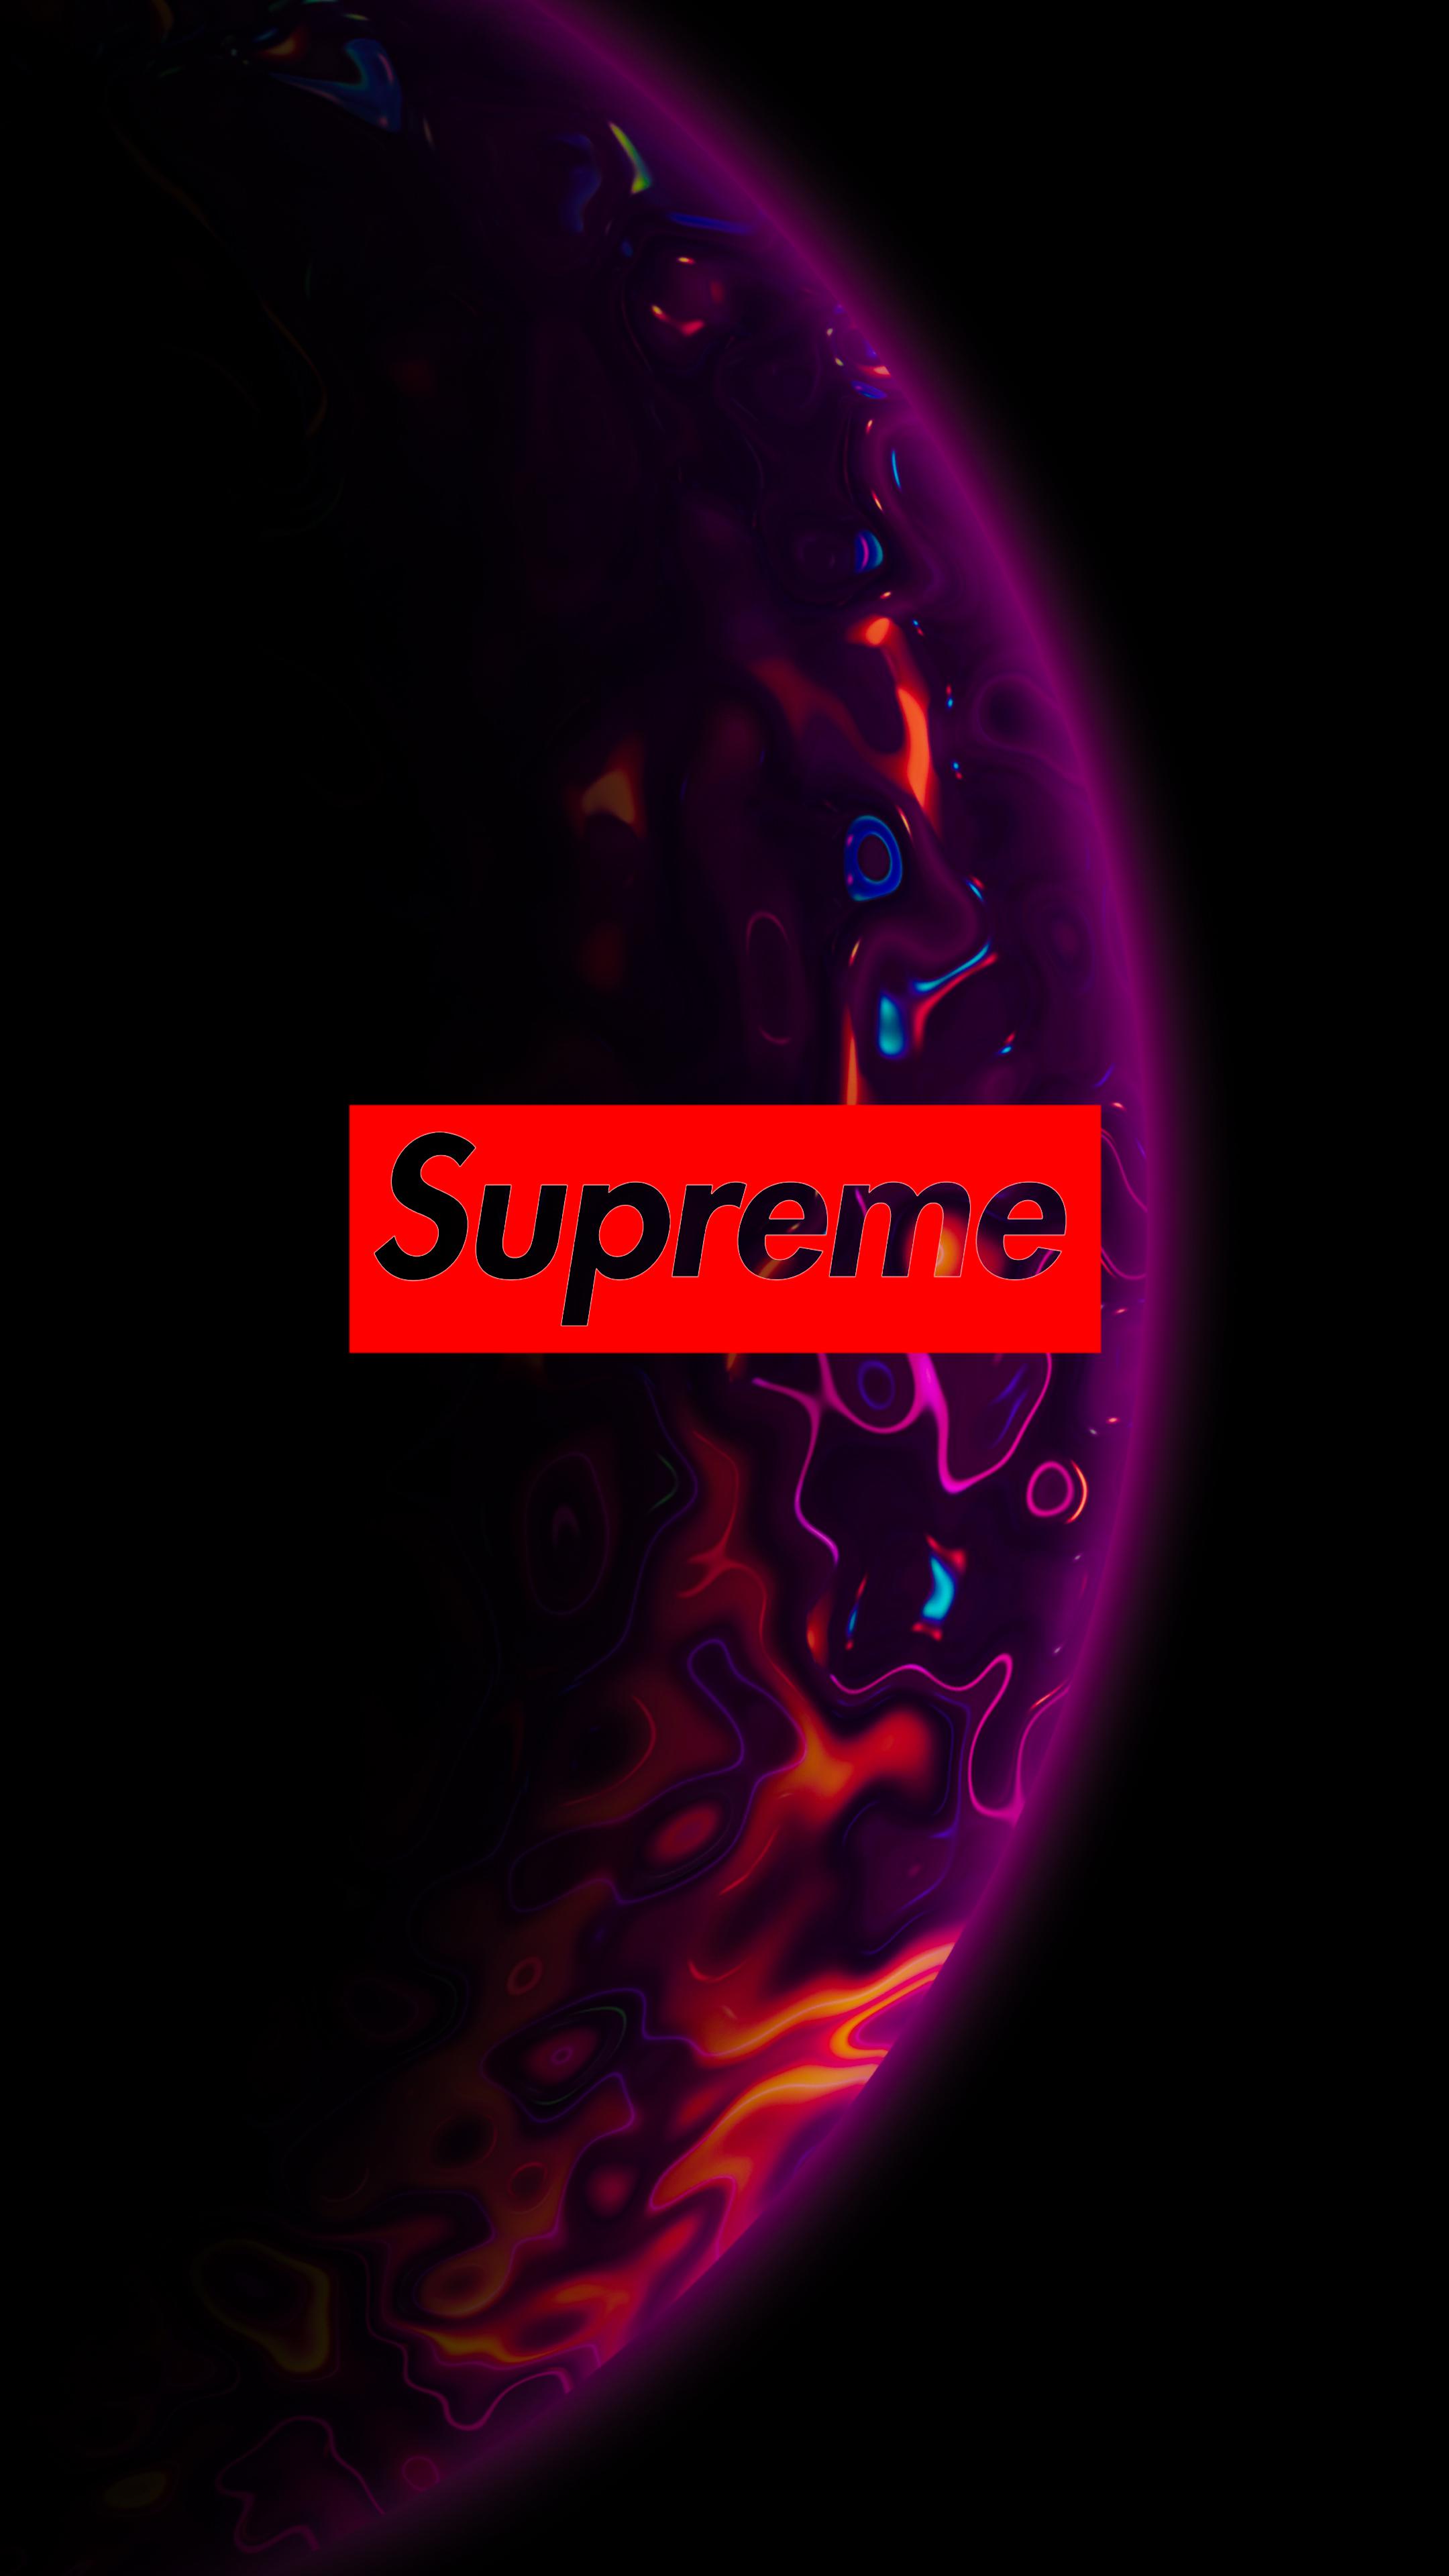 Supreme wallpaper for your phone! - Supreme